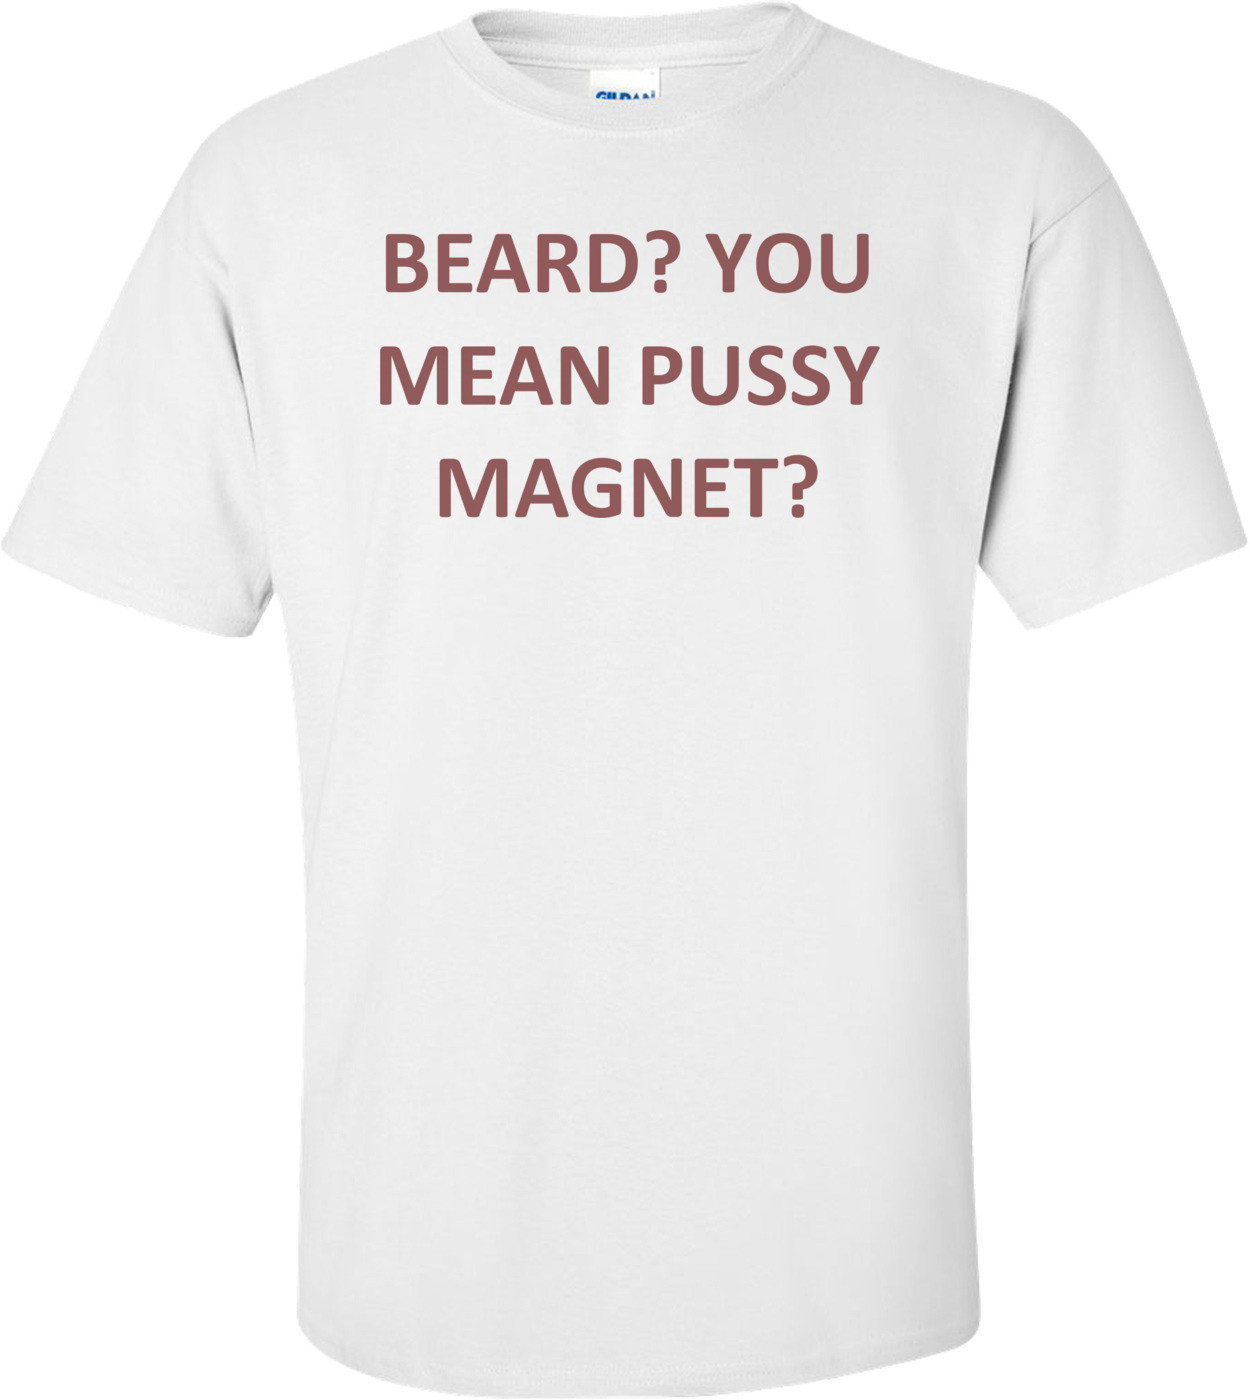 Pussy Magnet Shirt 97